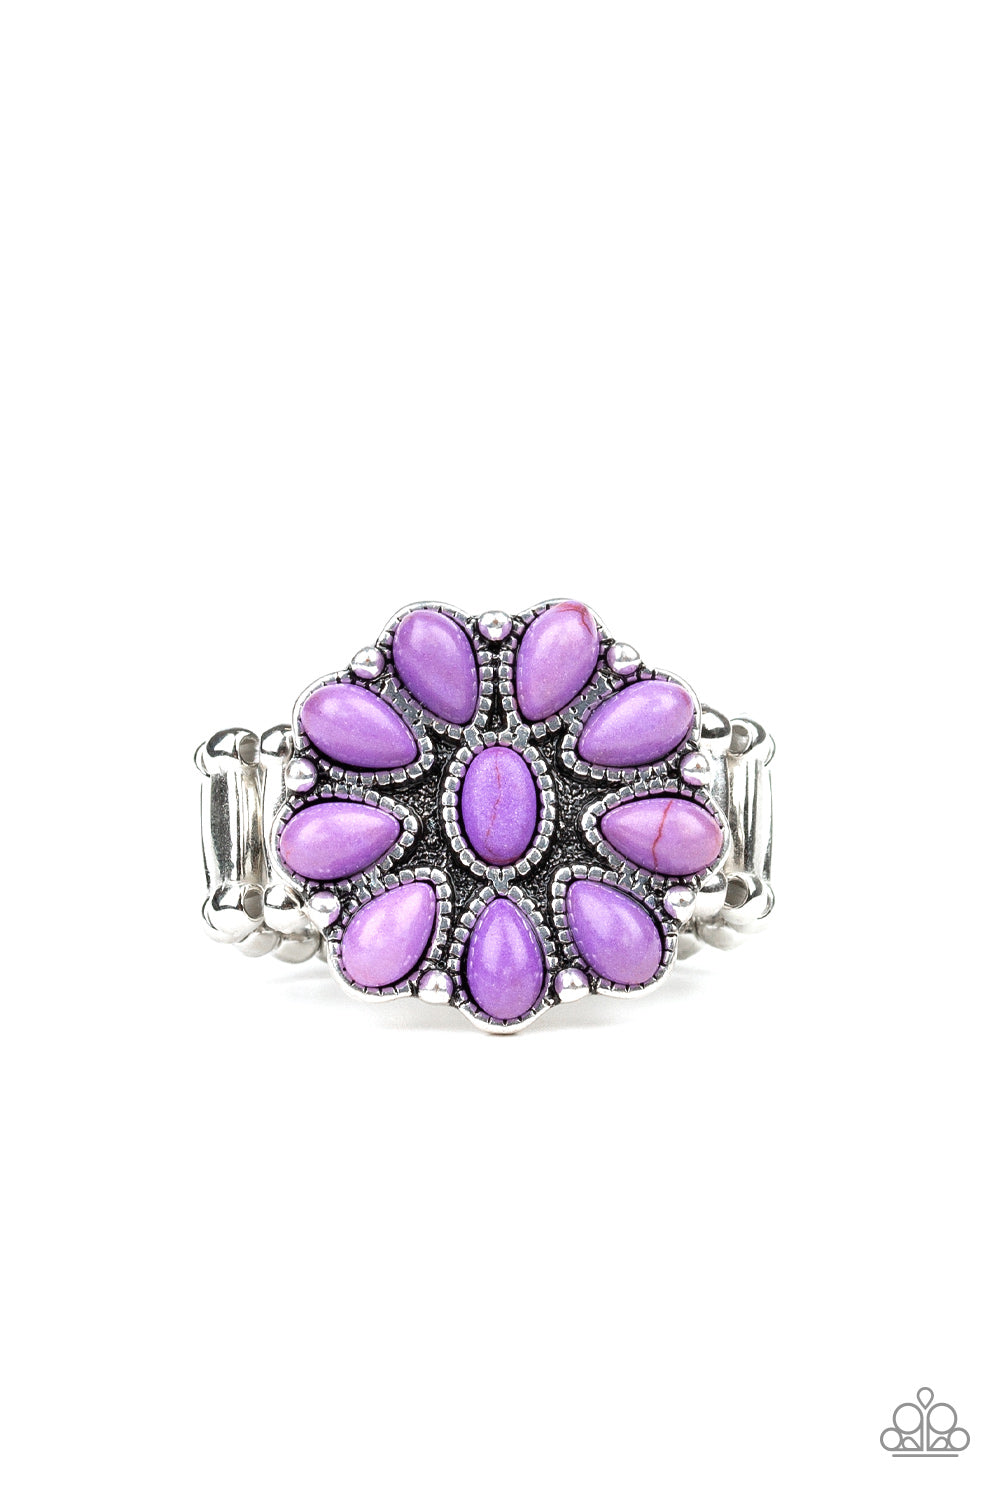 Stone Gardenia - purple - Paparazzi ring – JewelryBlingThing